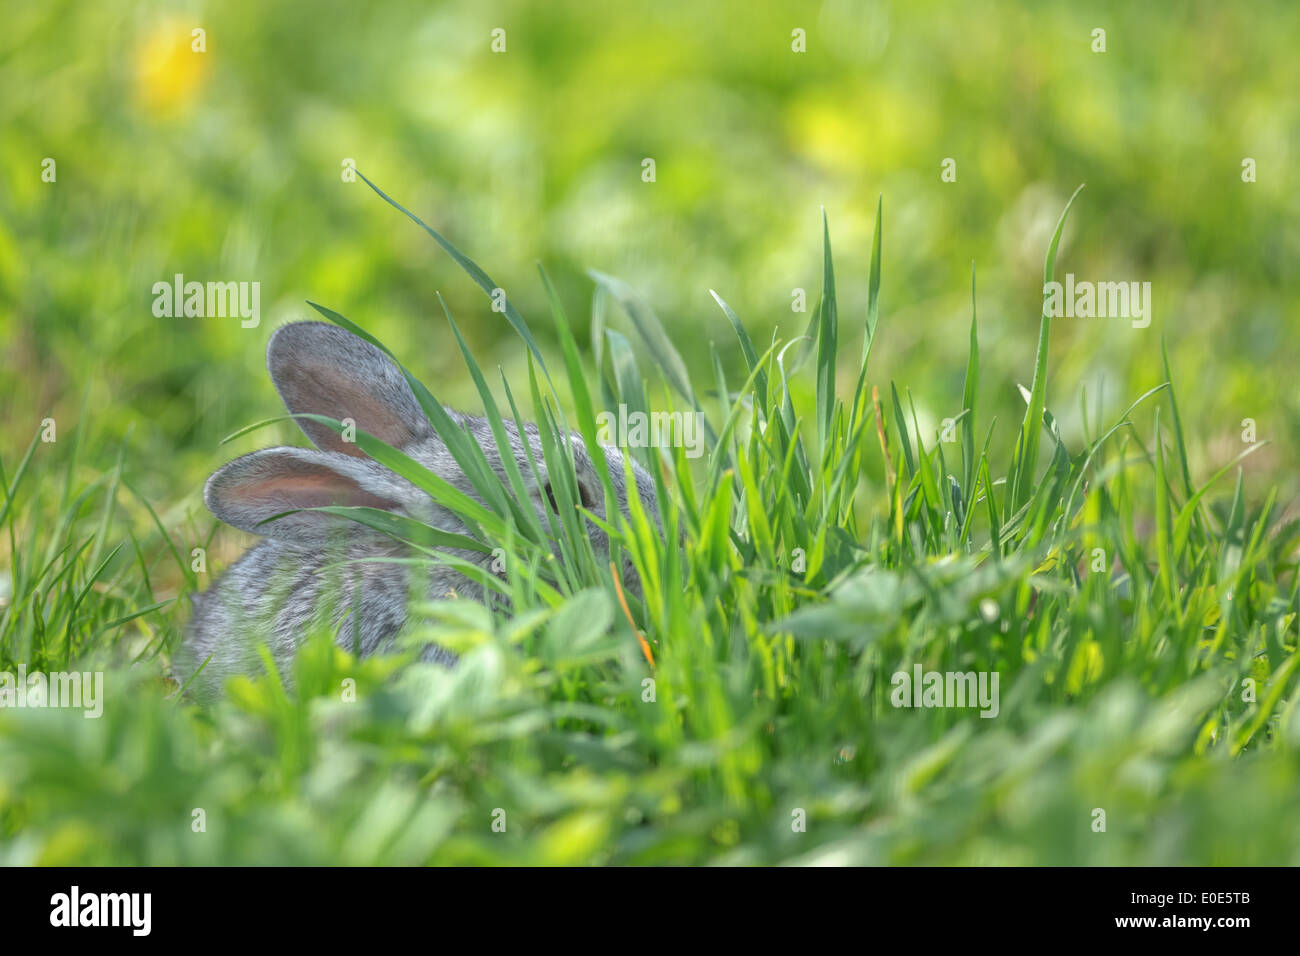 gray rabbit in grass closeup Stock Photo